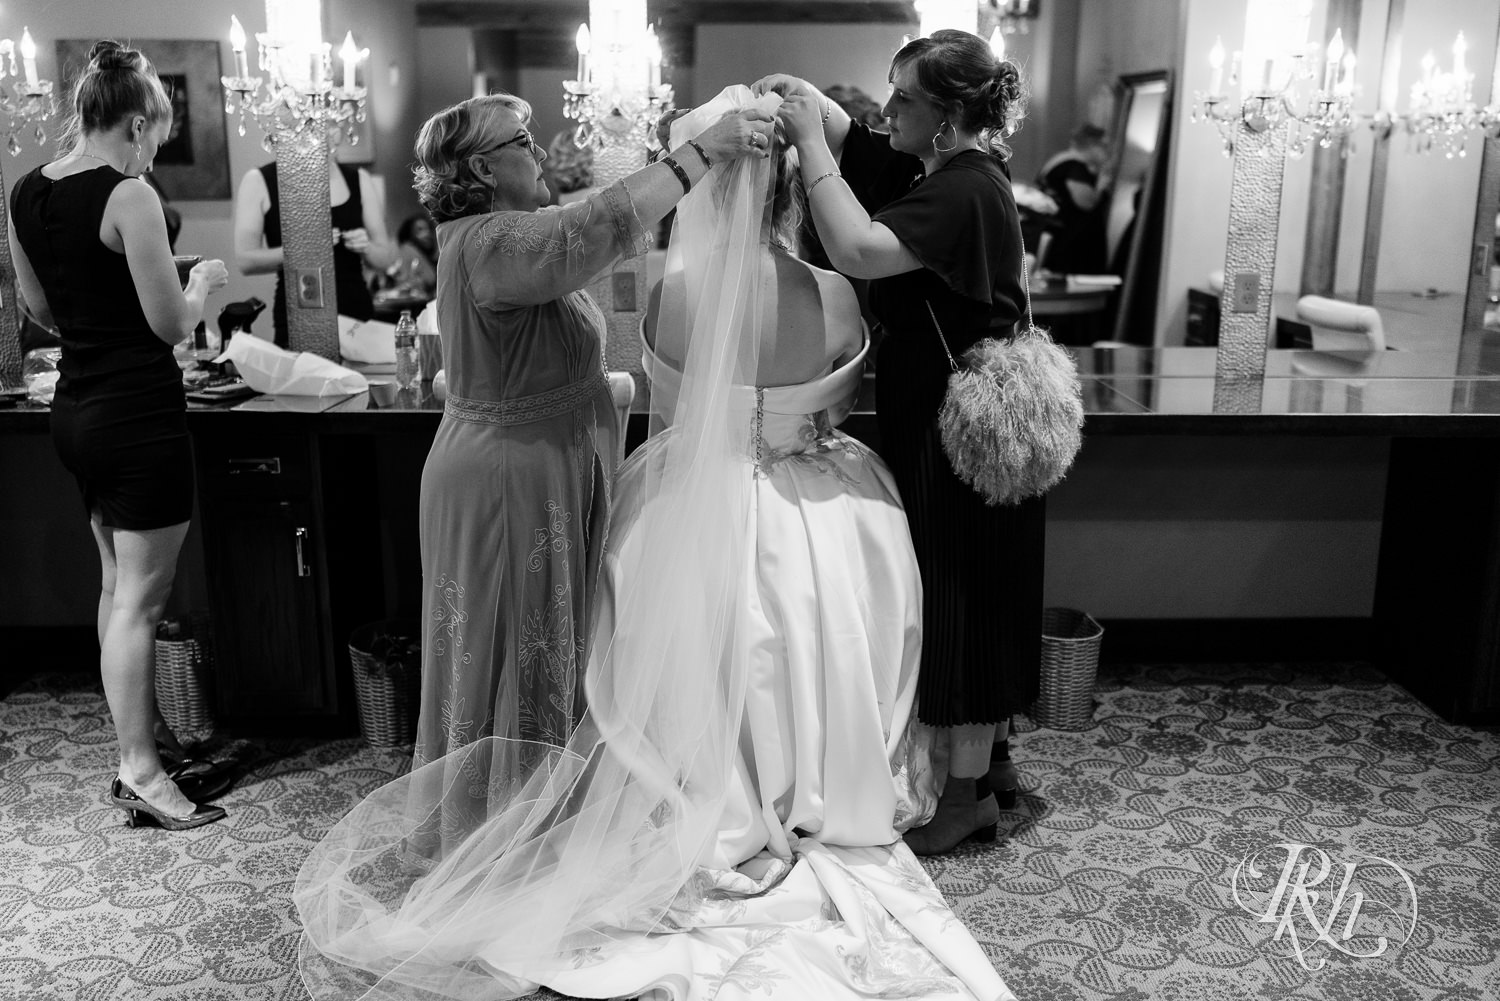 Bride getting ready before wedding ceremony at Abulae in Saint Paul, Minnesota.